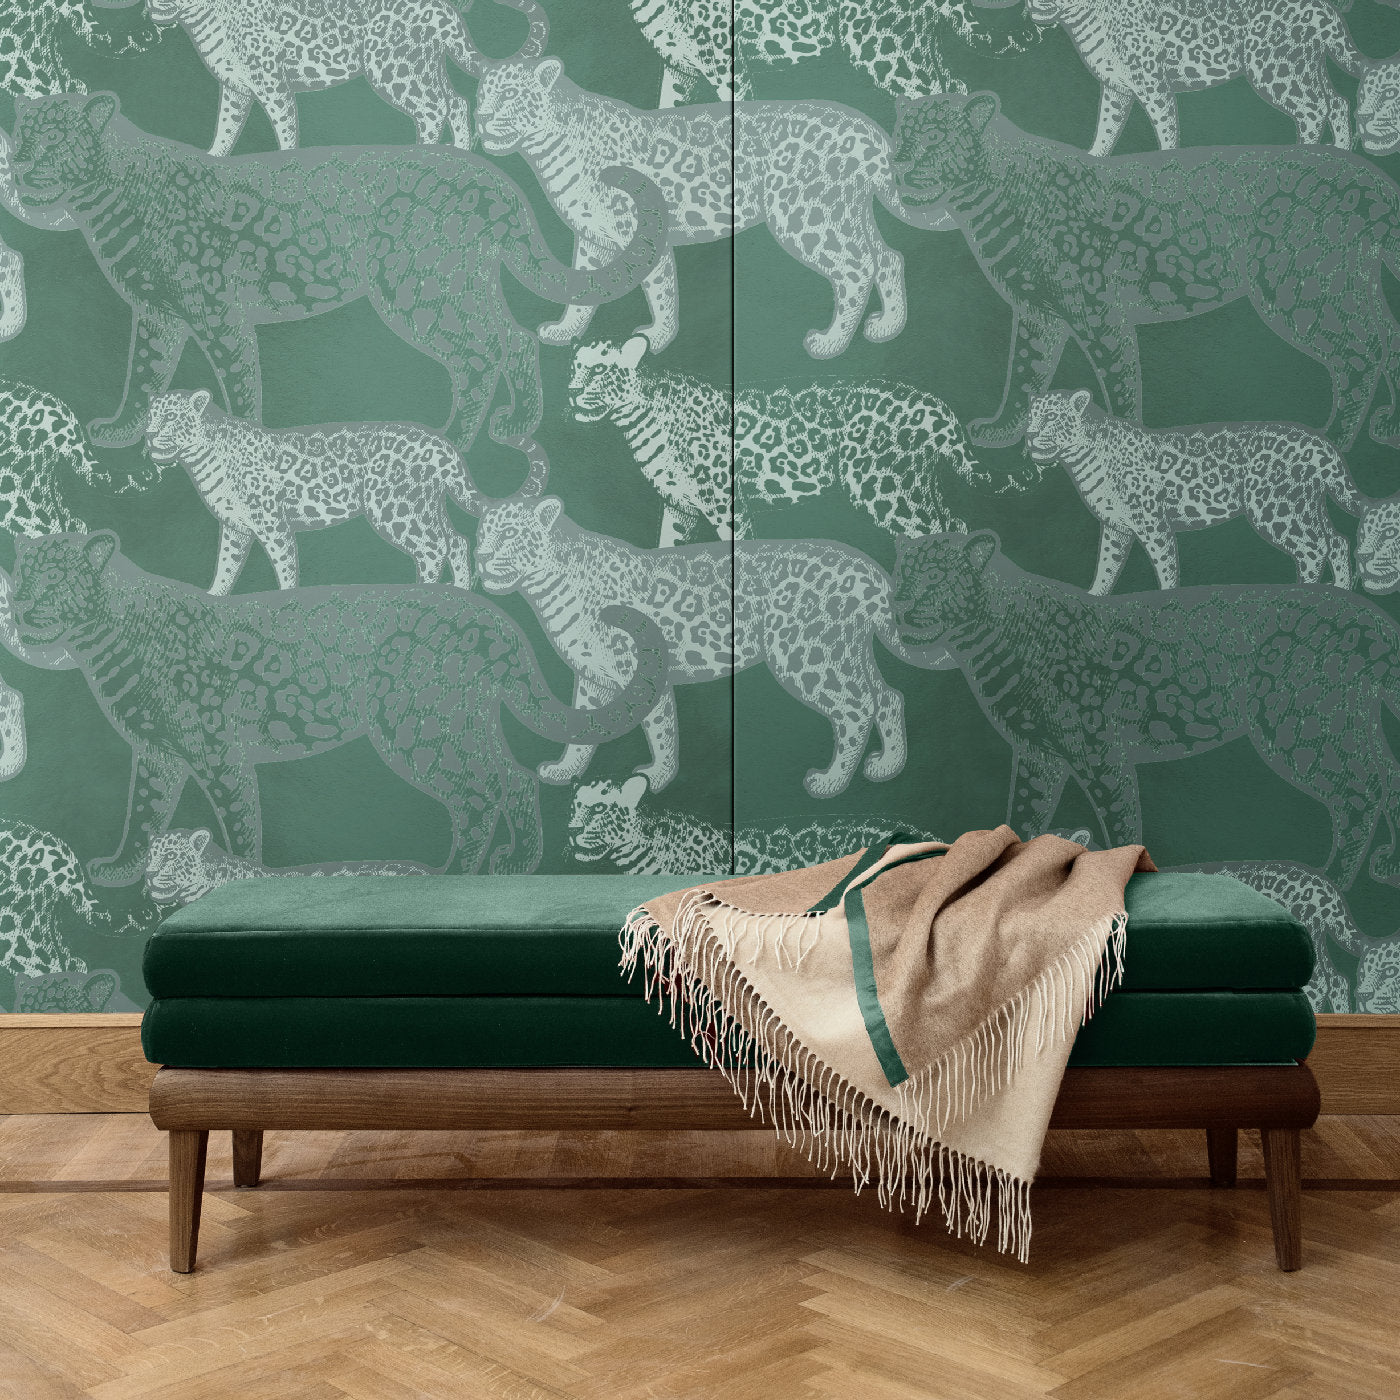 Walking Leopards Green Panel #2 - Alternative view 1